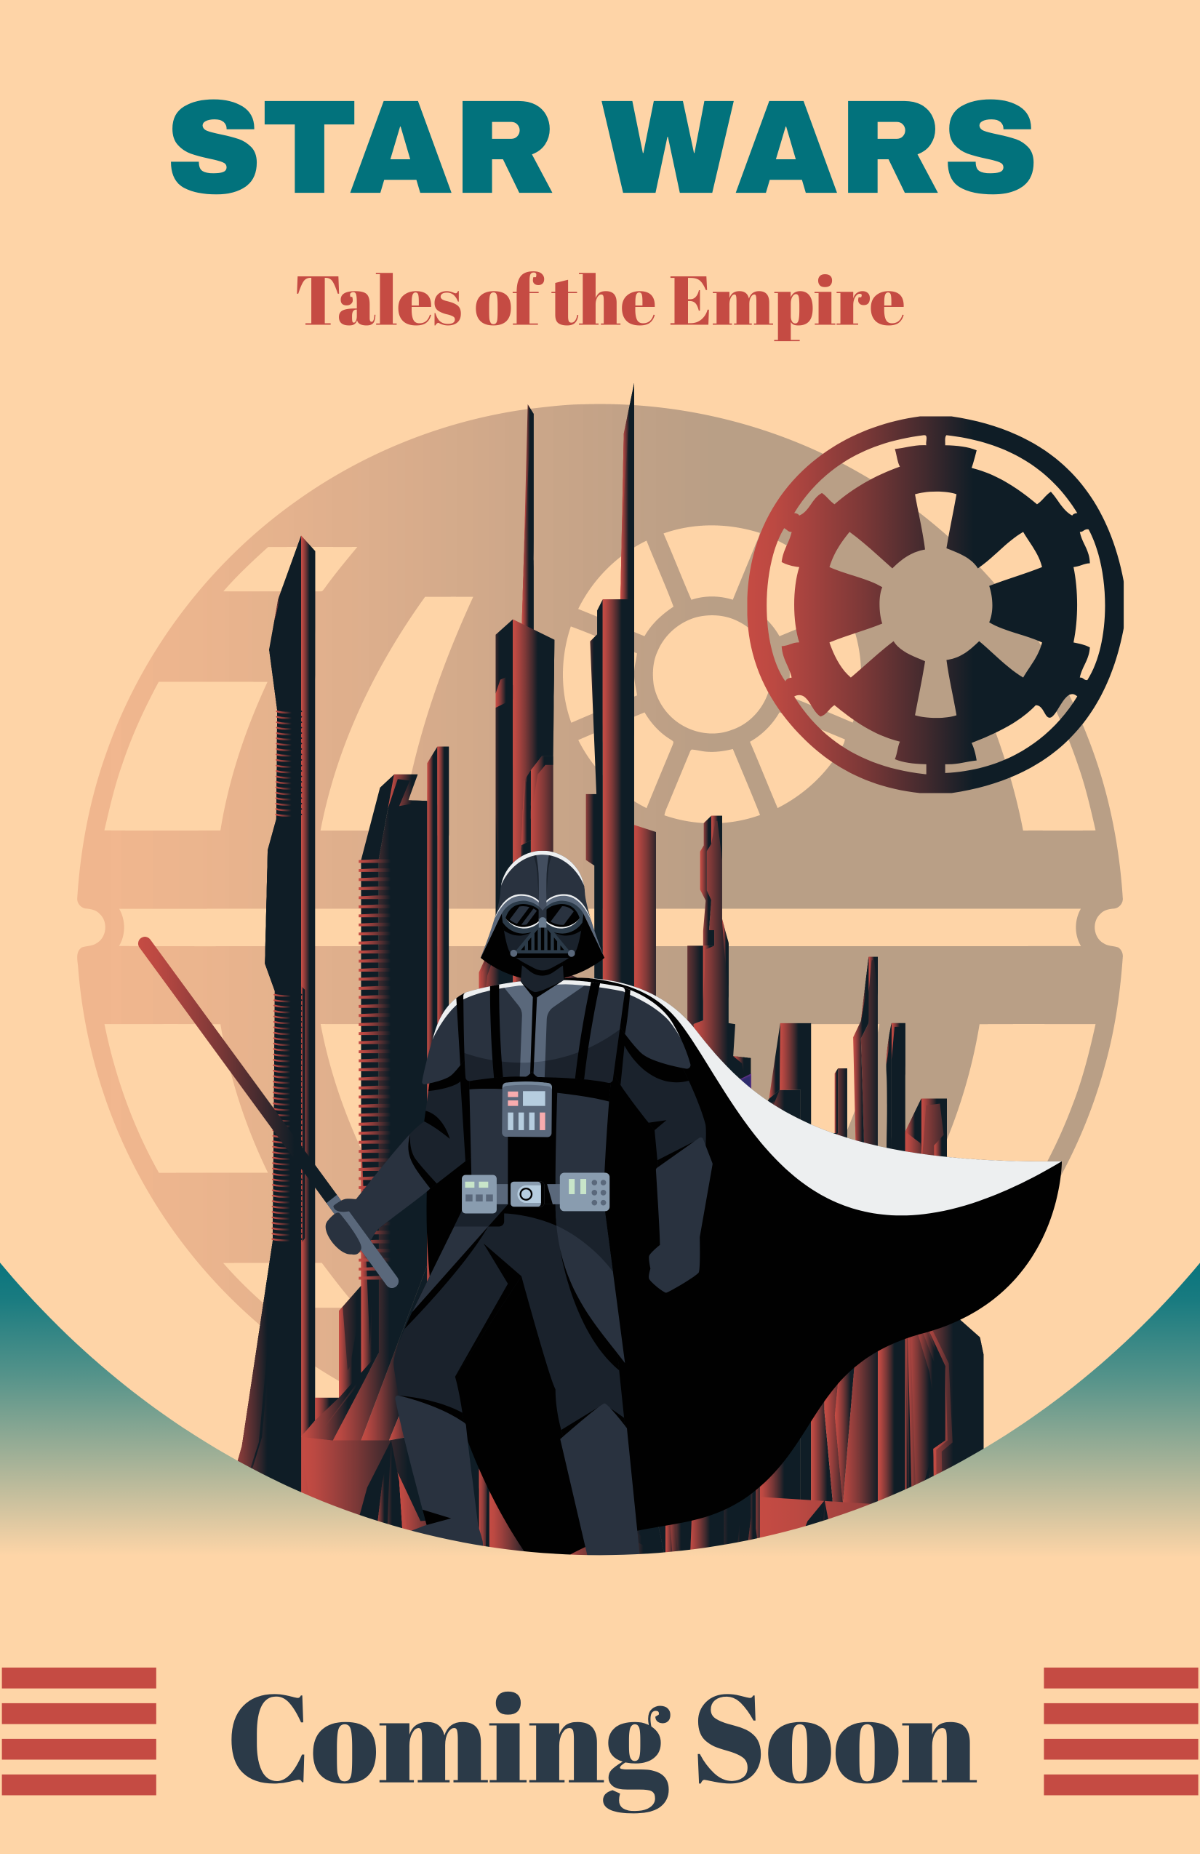 Star Wars Retro Poster Template